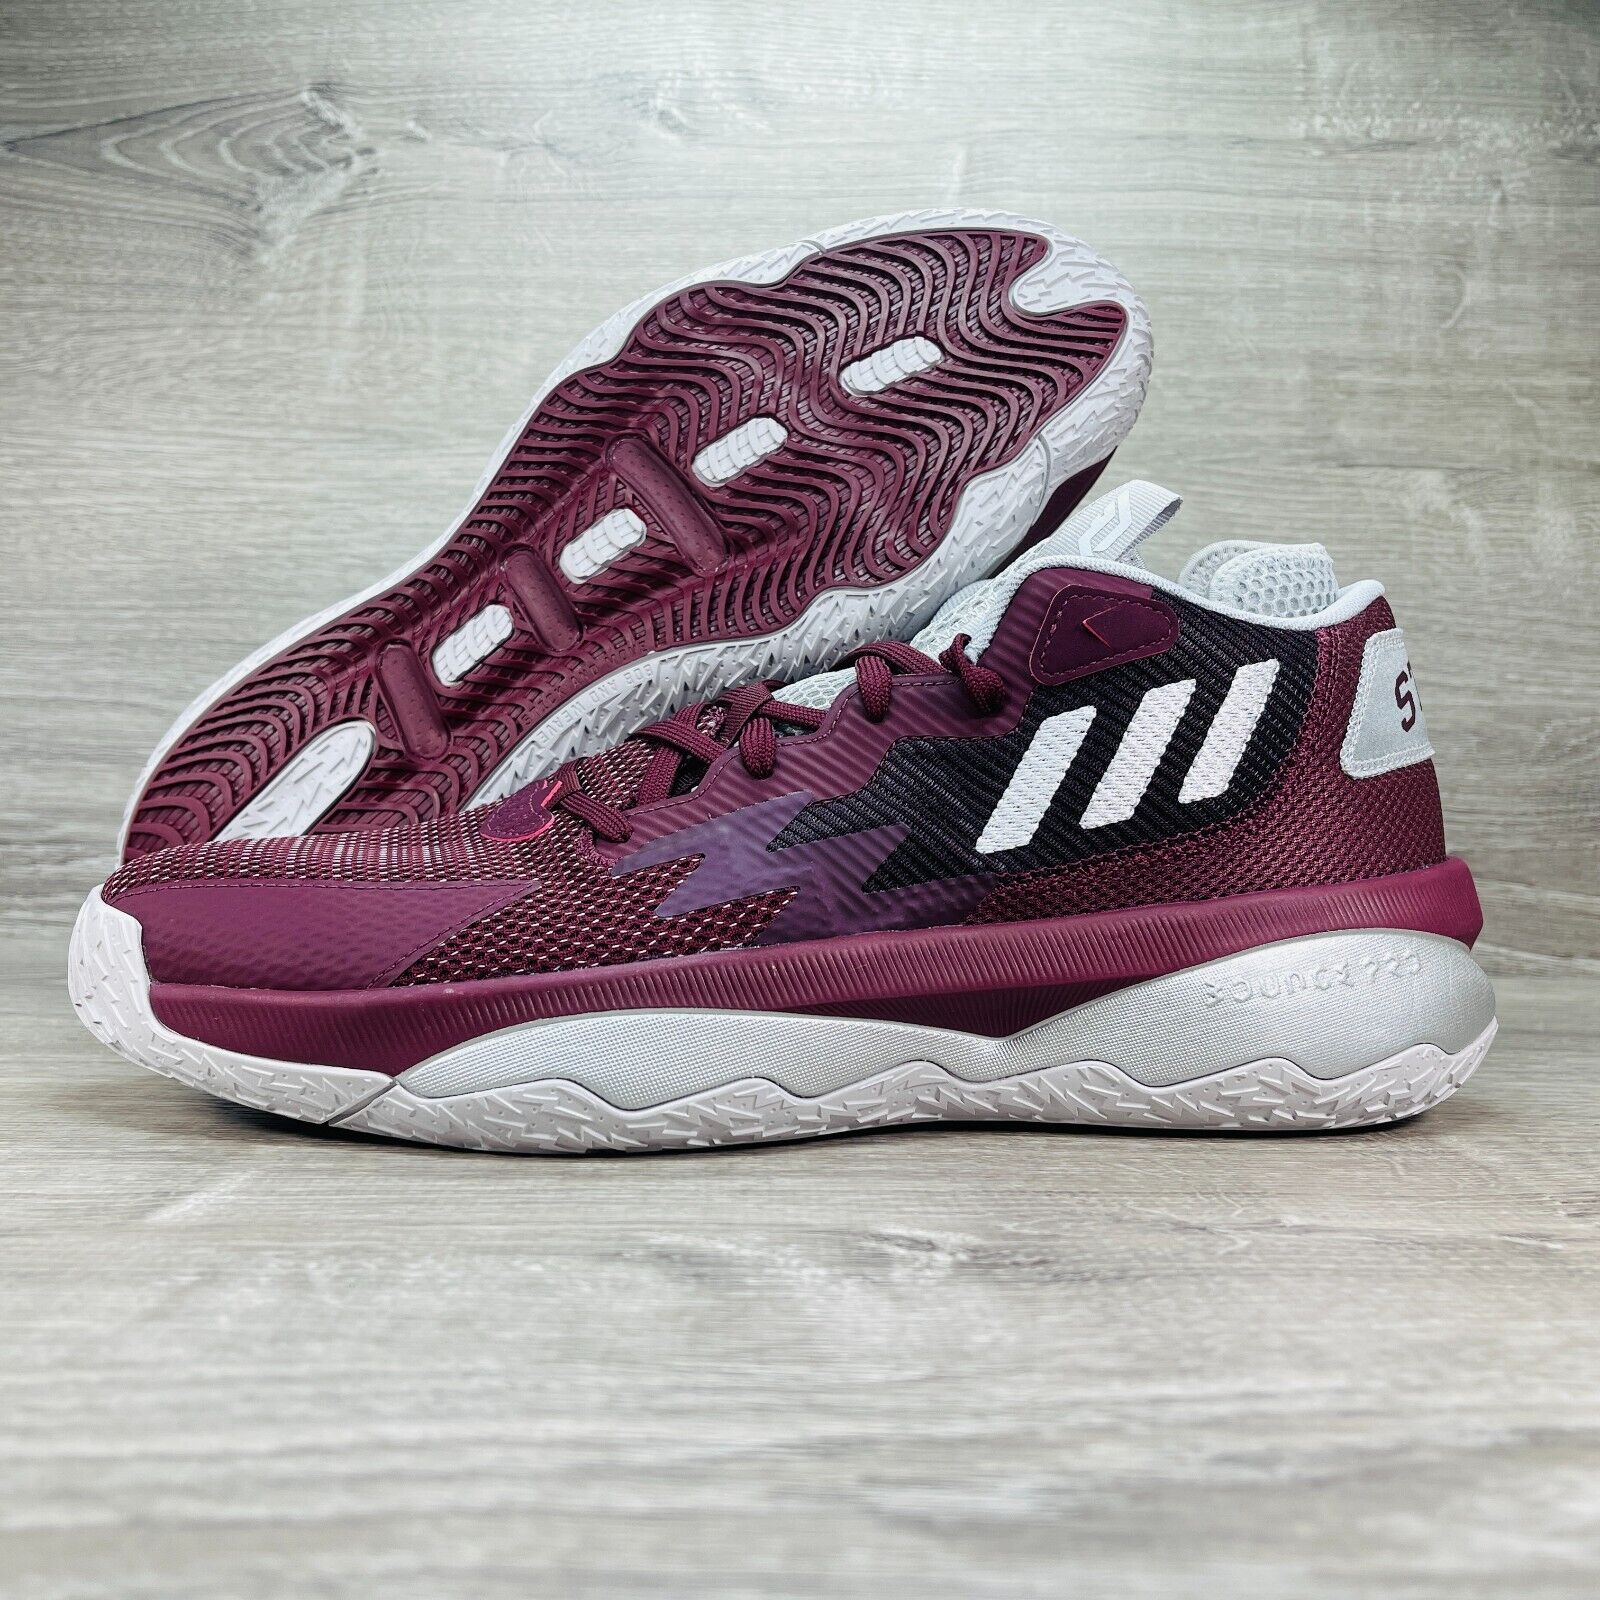 Astonishing Adidas Dame 8 Mississippi State Basketball Shoes Mens Sneaker Size 13 GZ9710 on eBay